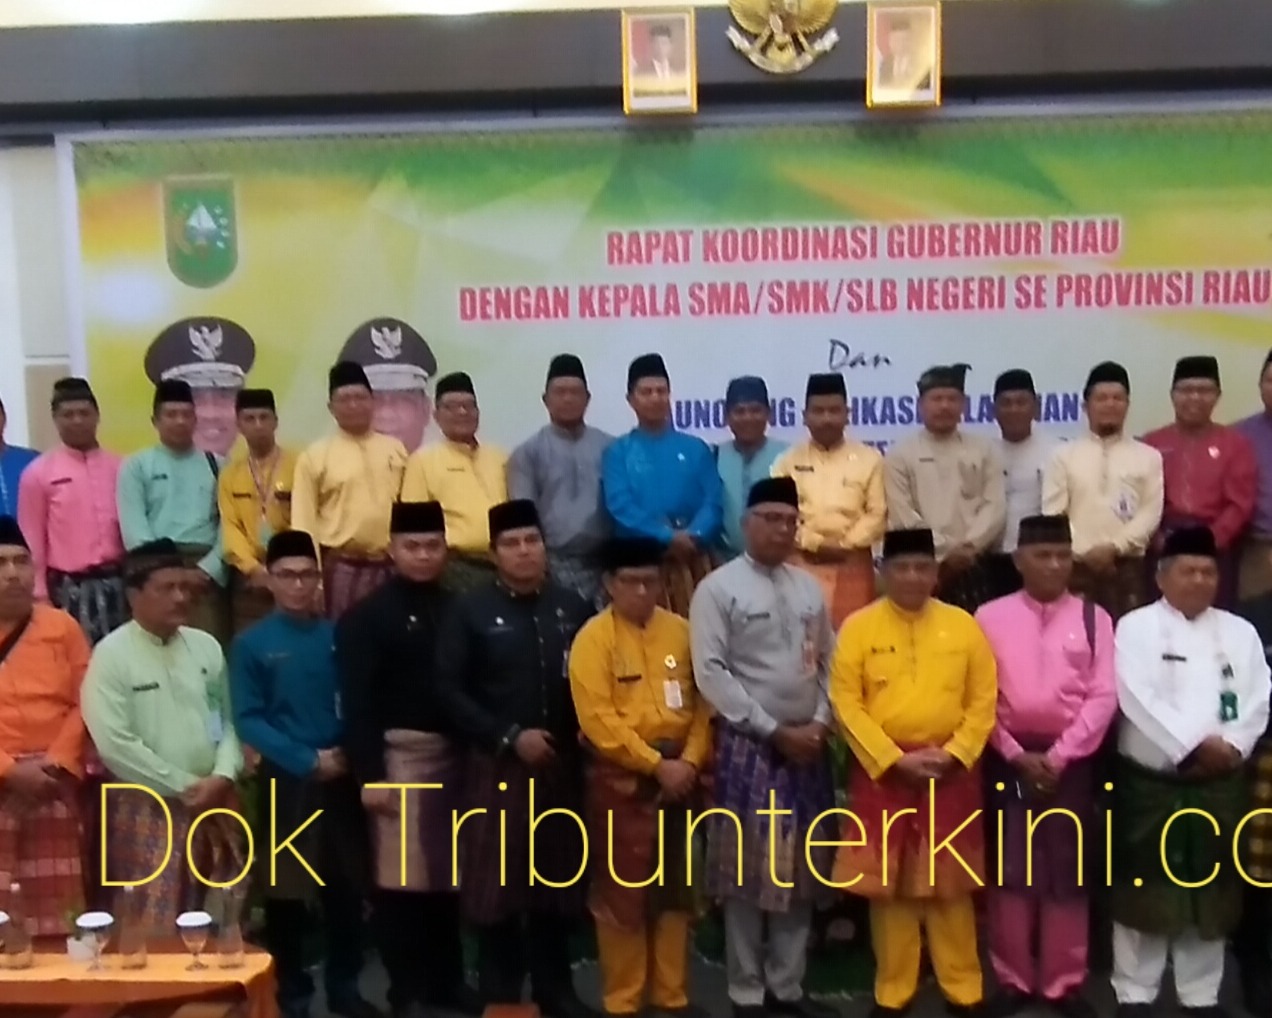 Wagubri Hadiri Rakor Gubernur Riau Dengan Kepala SMA/SMK/SLB Negeri Se Provinsi Riau